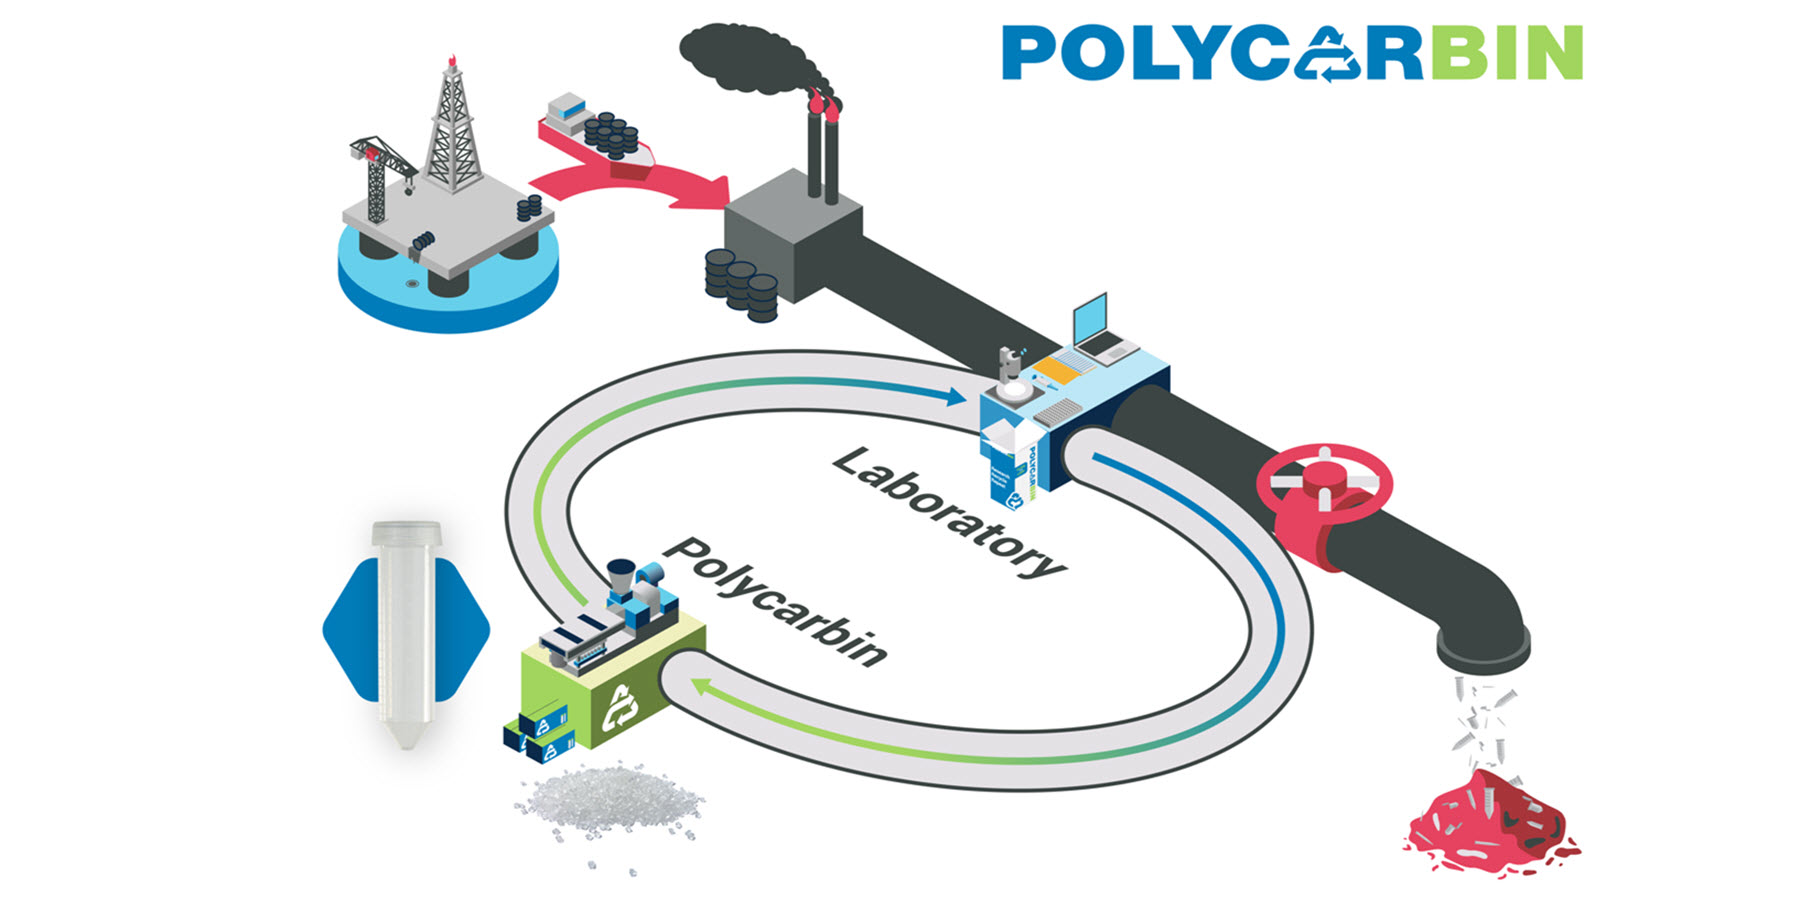 Polycarbin PPL may 2022-1